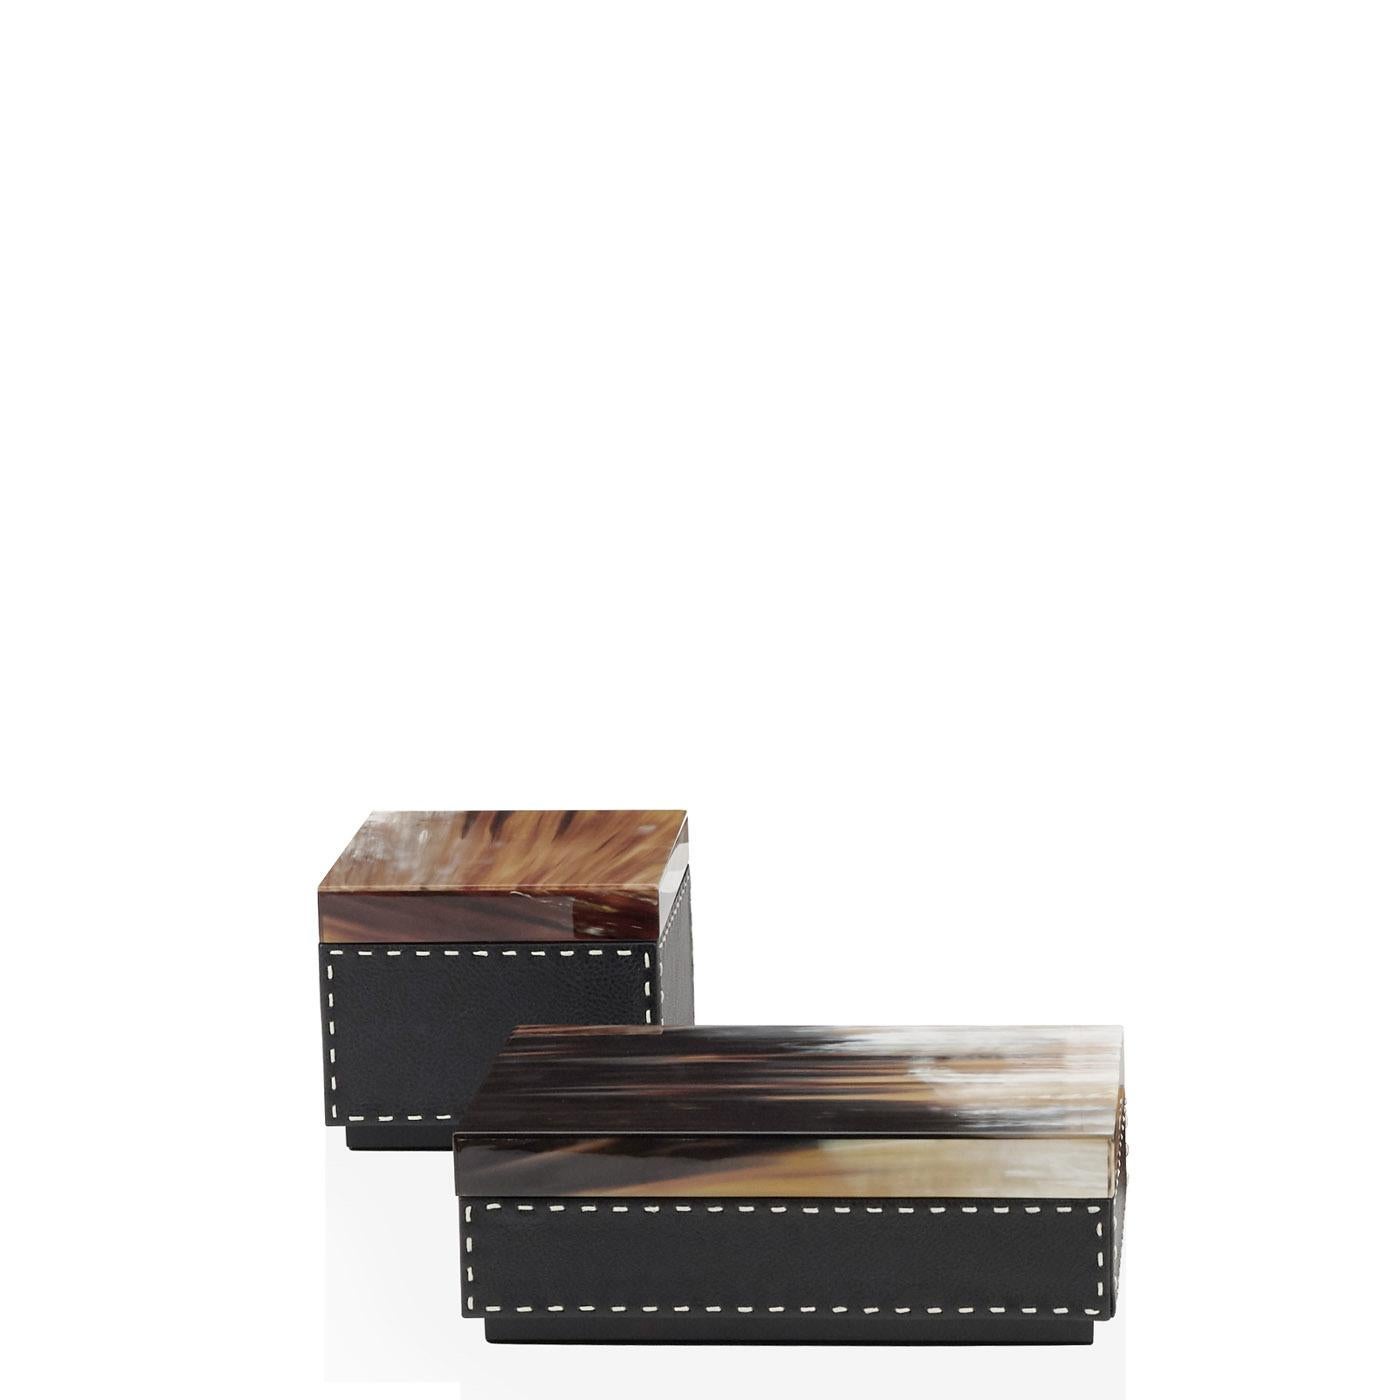 Ottavia Box in Pebbled Leather with Lid in Corno Italiano, Mod. 4467 For Sale 1